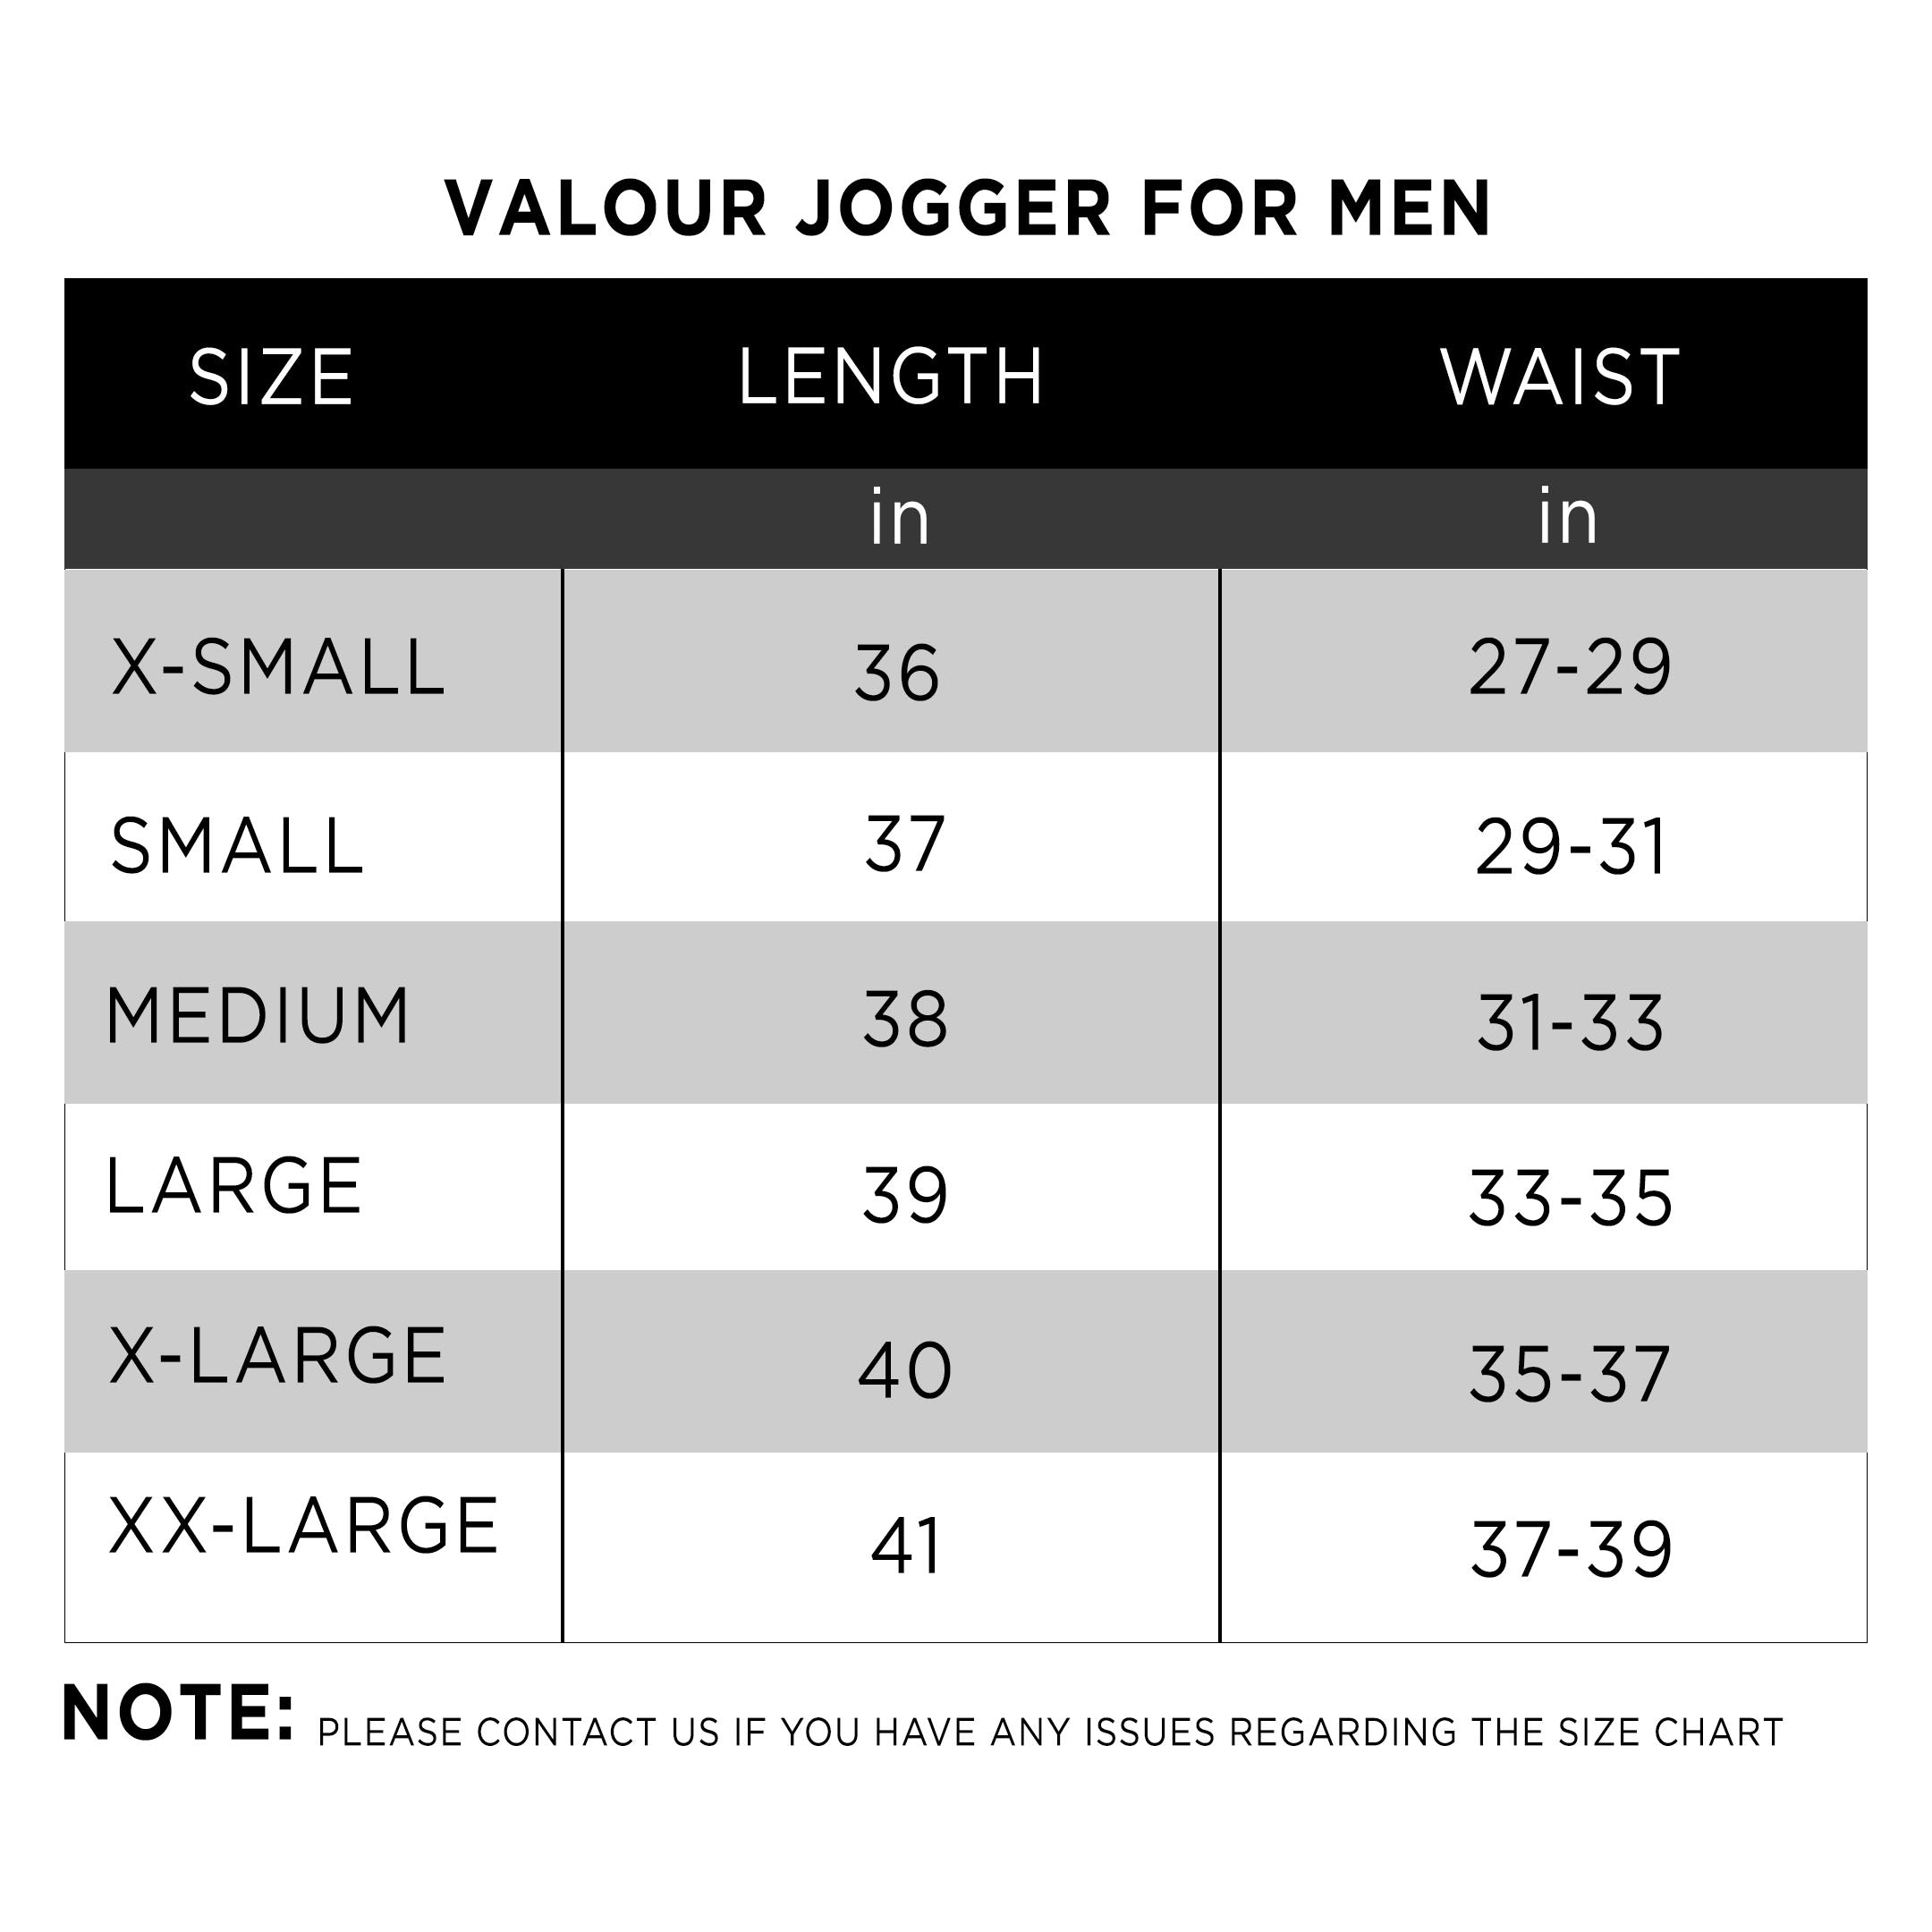 Valour Joggers for Men